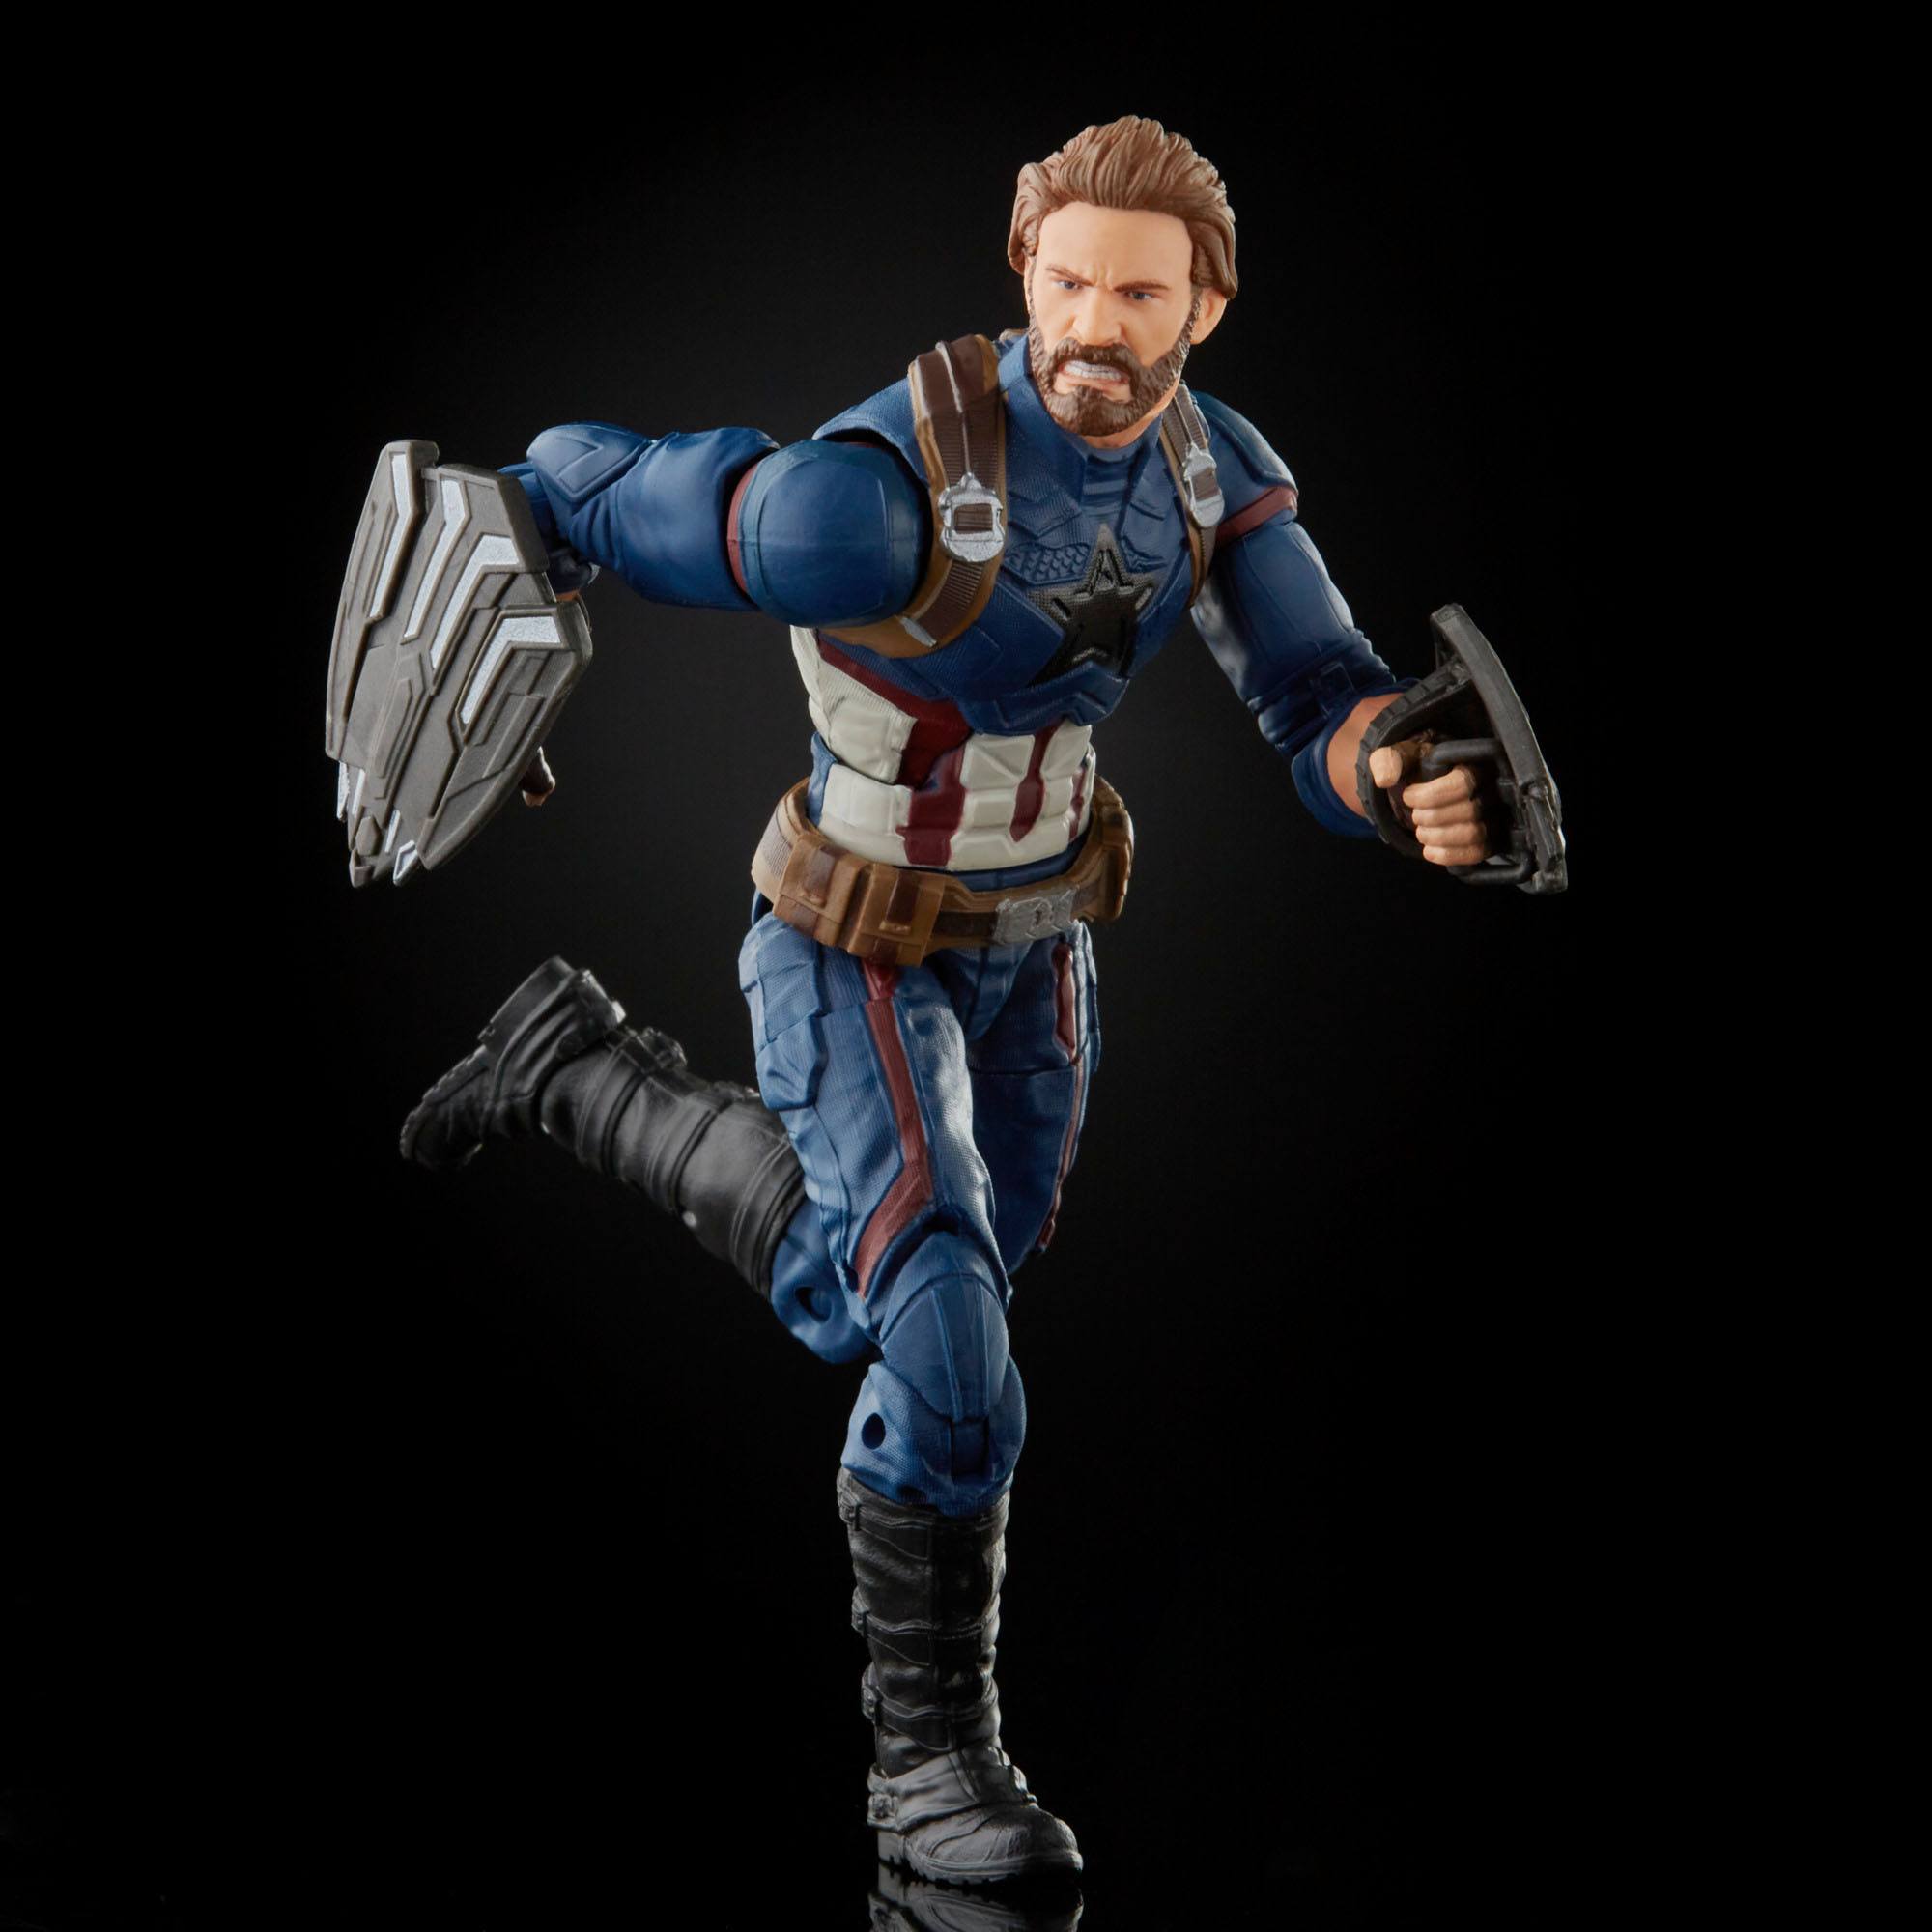 The Infinity Saga Marvel Legends Actionfigur 2021 Captain America (Avengers: Infinity War) 15 cm F01855L0 5010993839360